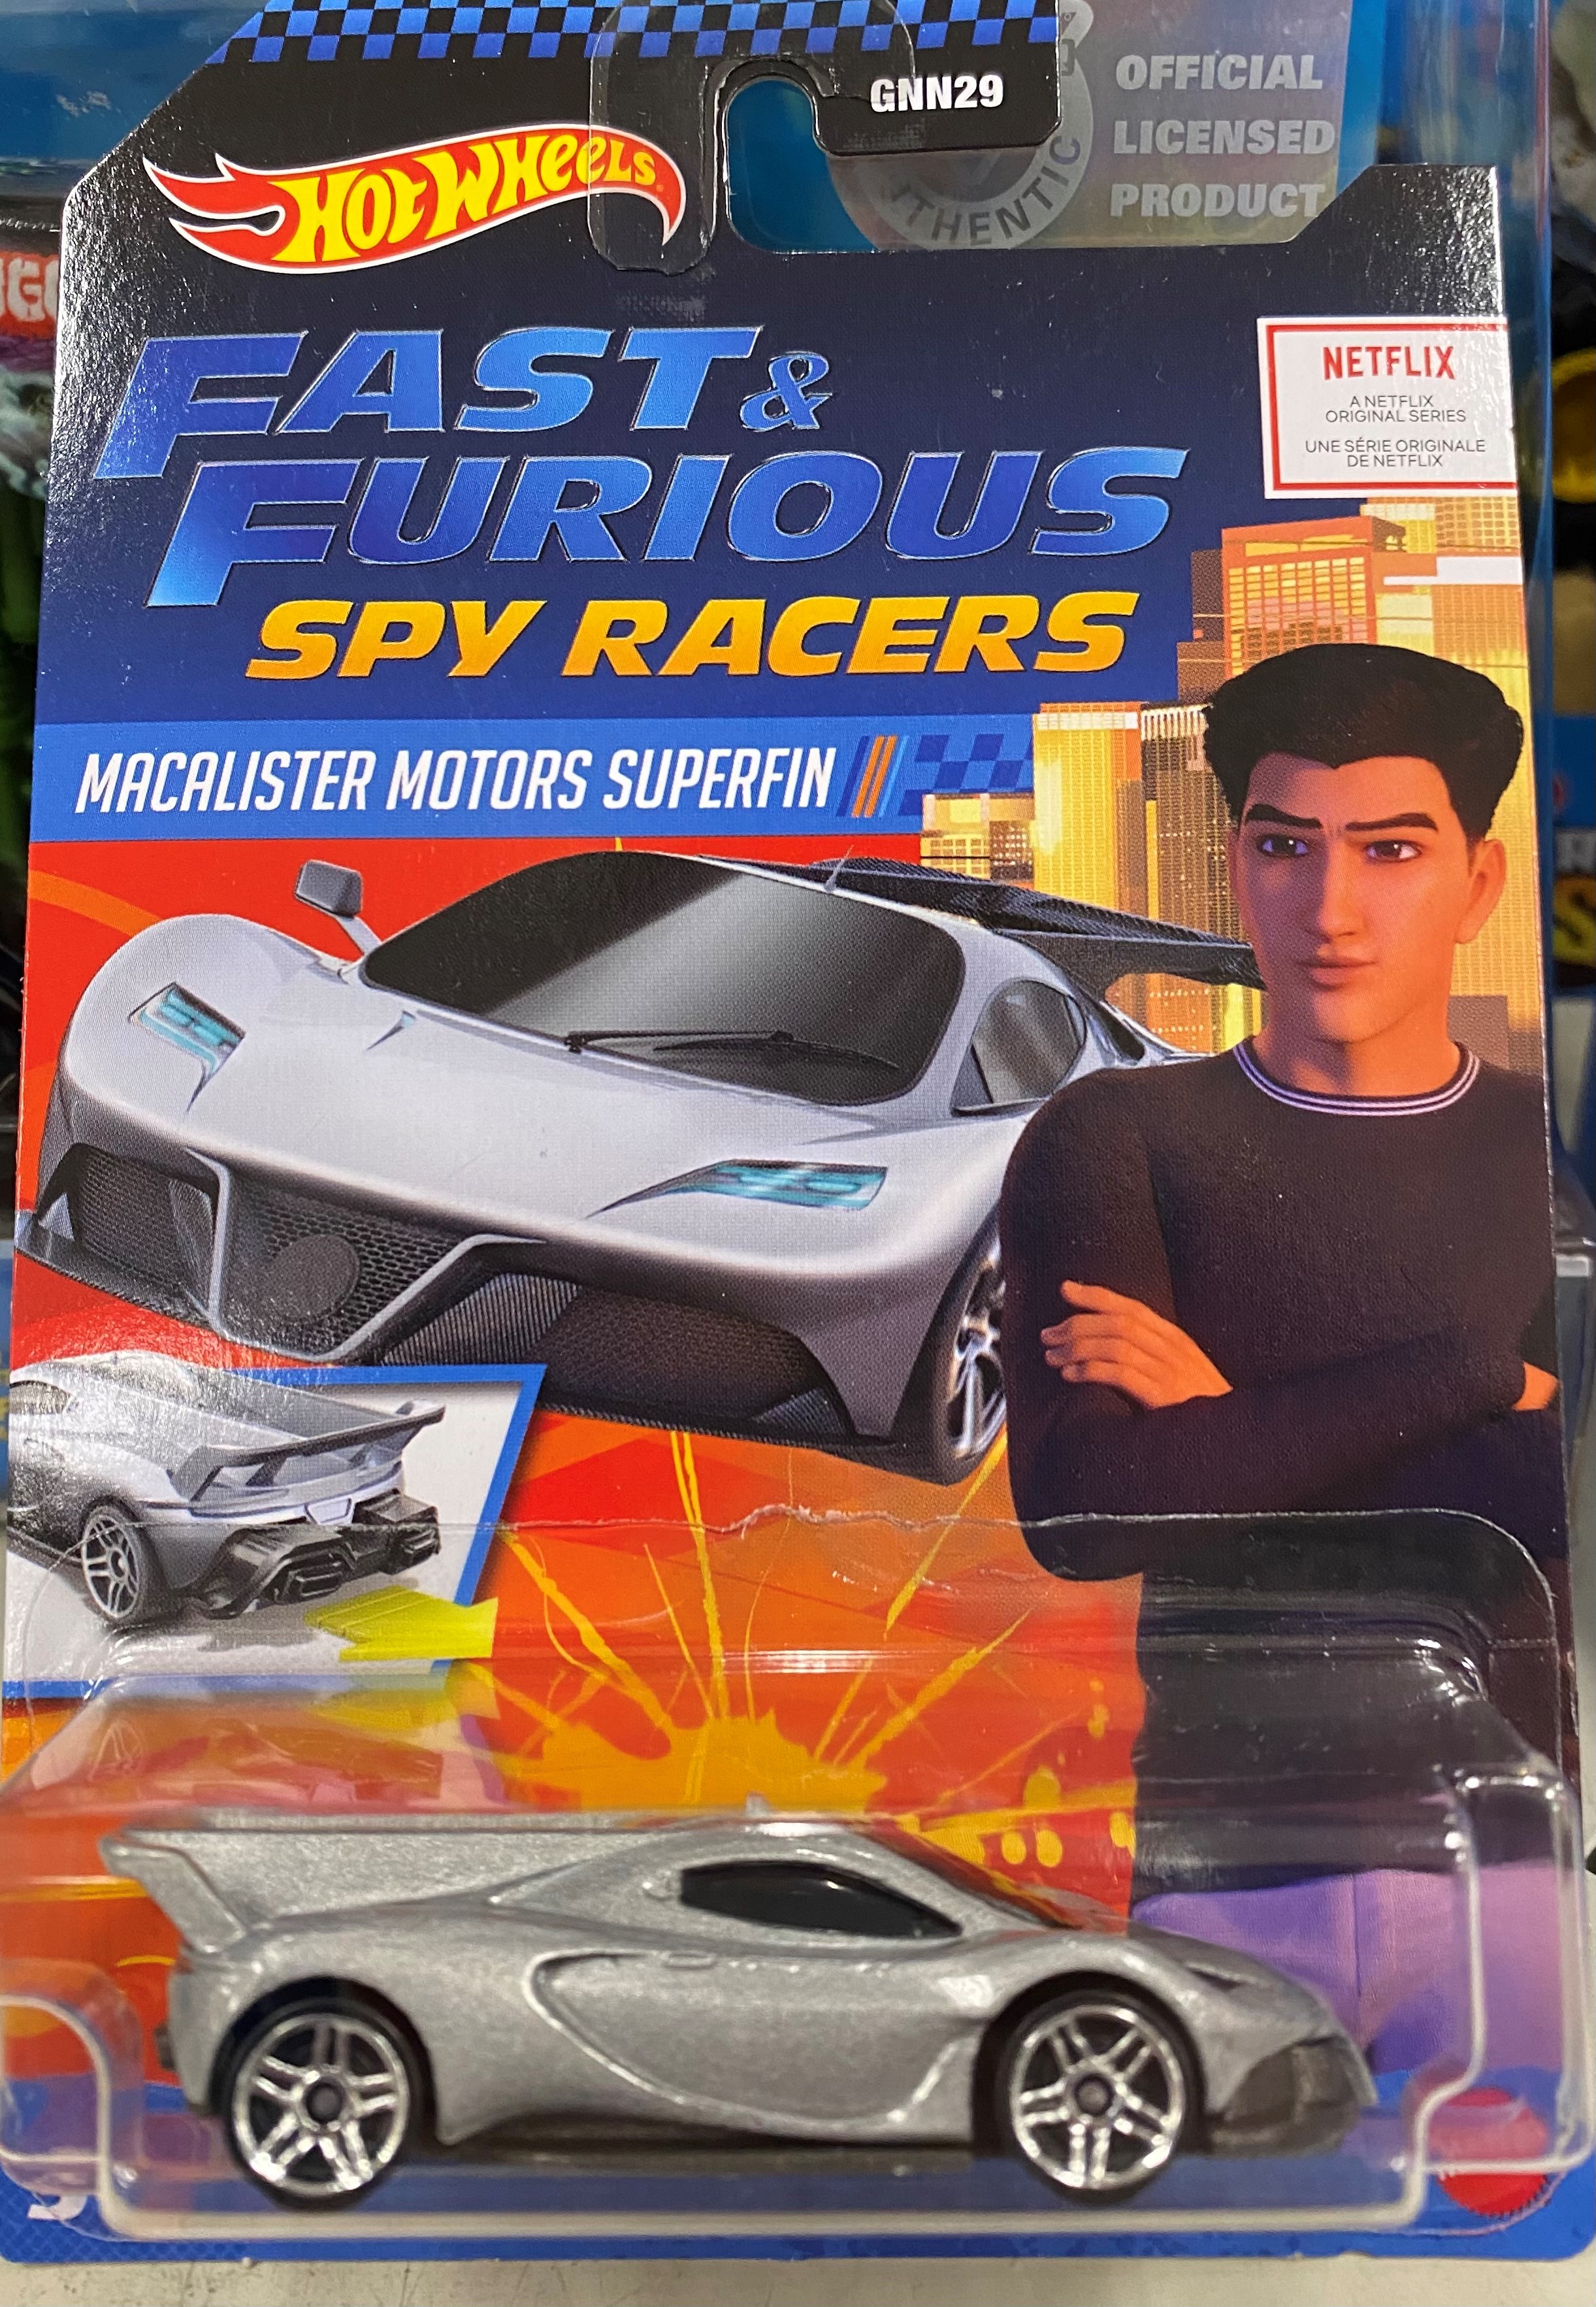 Fast & Furious Spy Racers Series, Hot Wheels Wiki